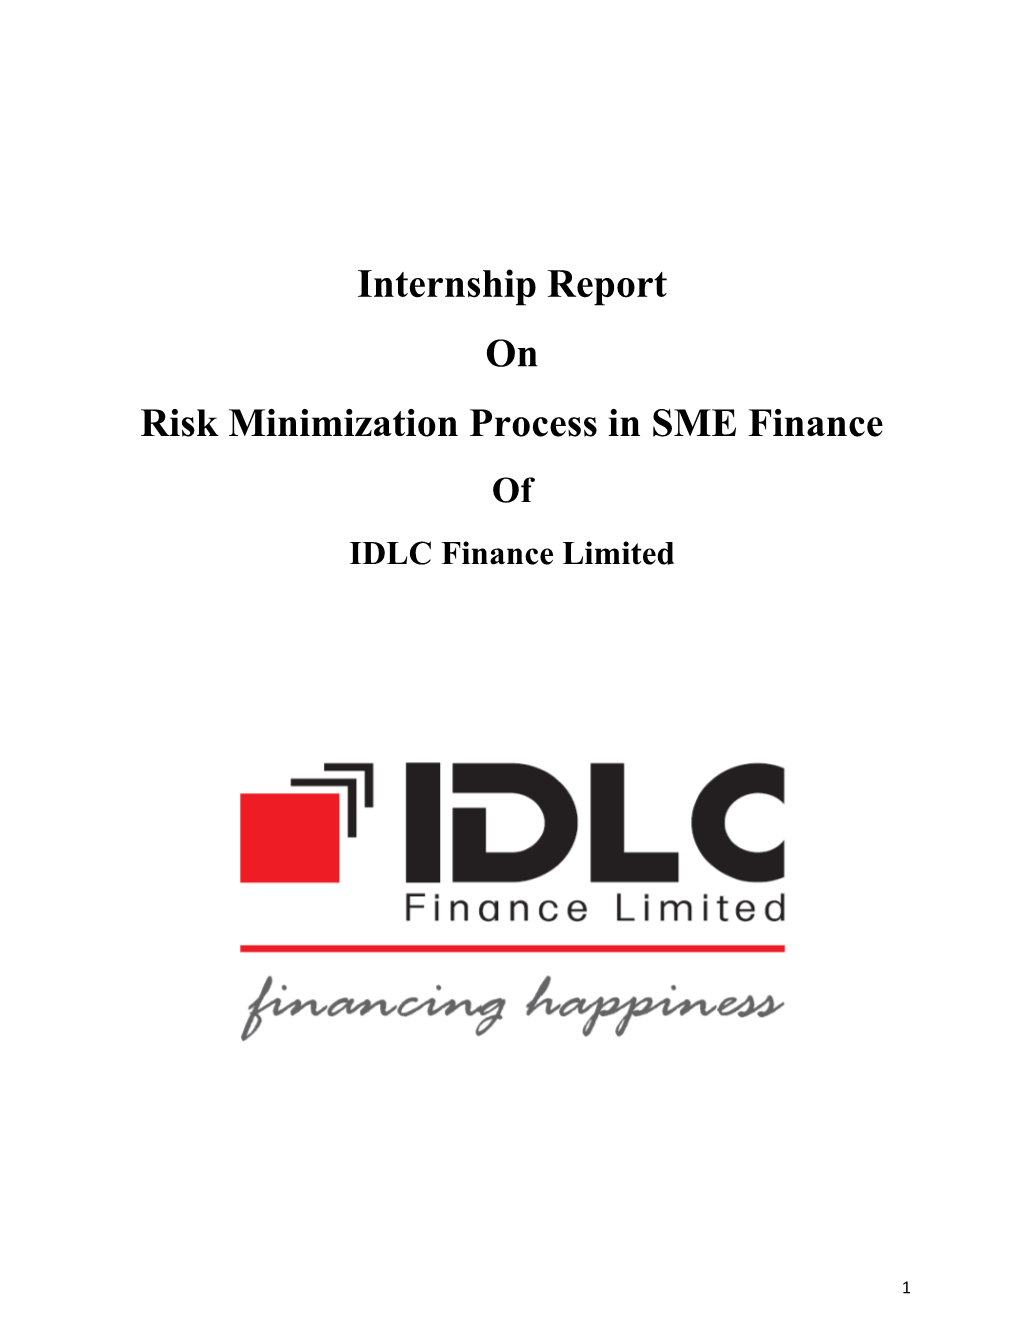 Internship Report on Risk Minimization Process in SME Finance of IDLC Finance Limited